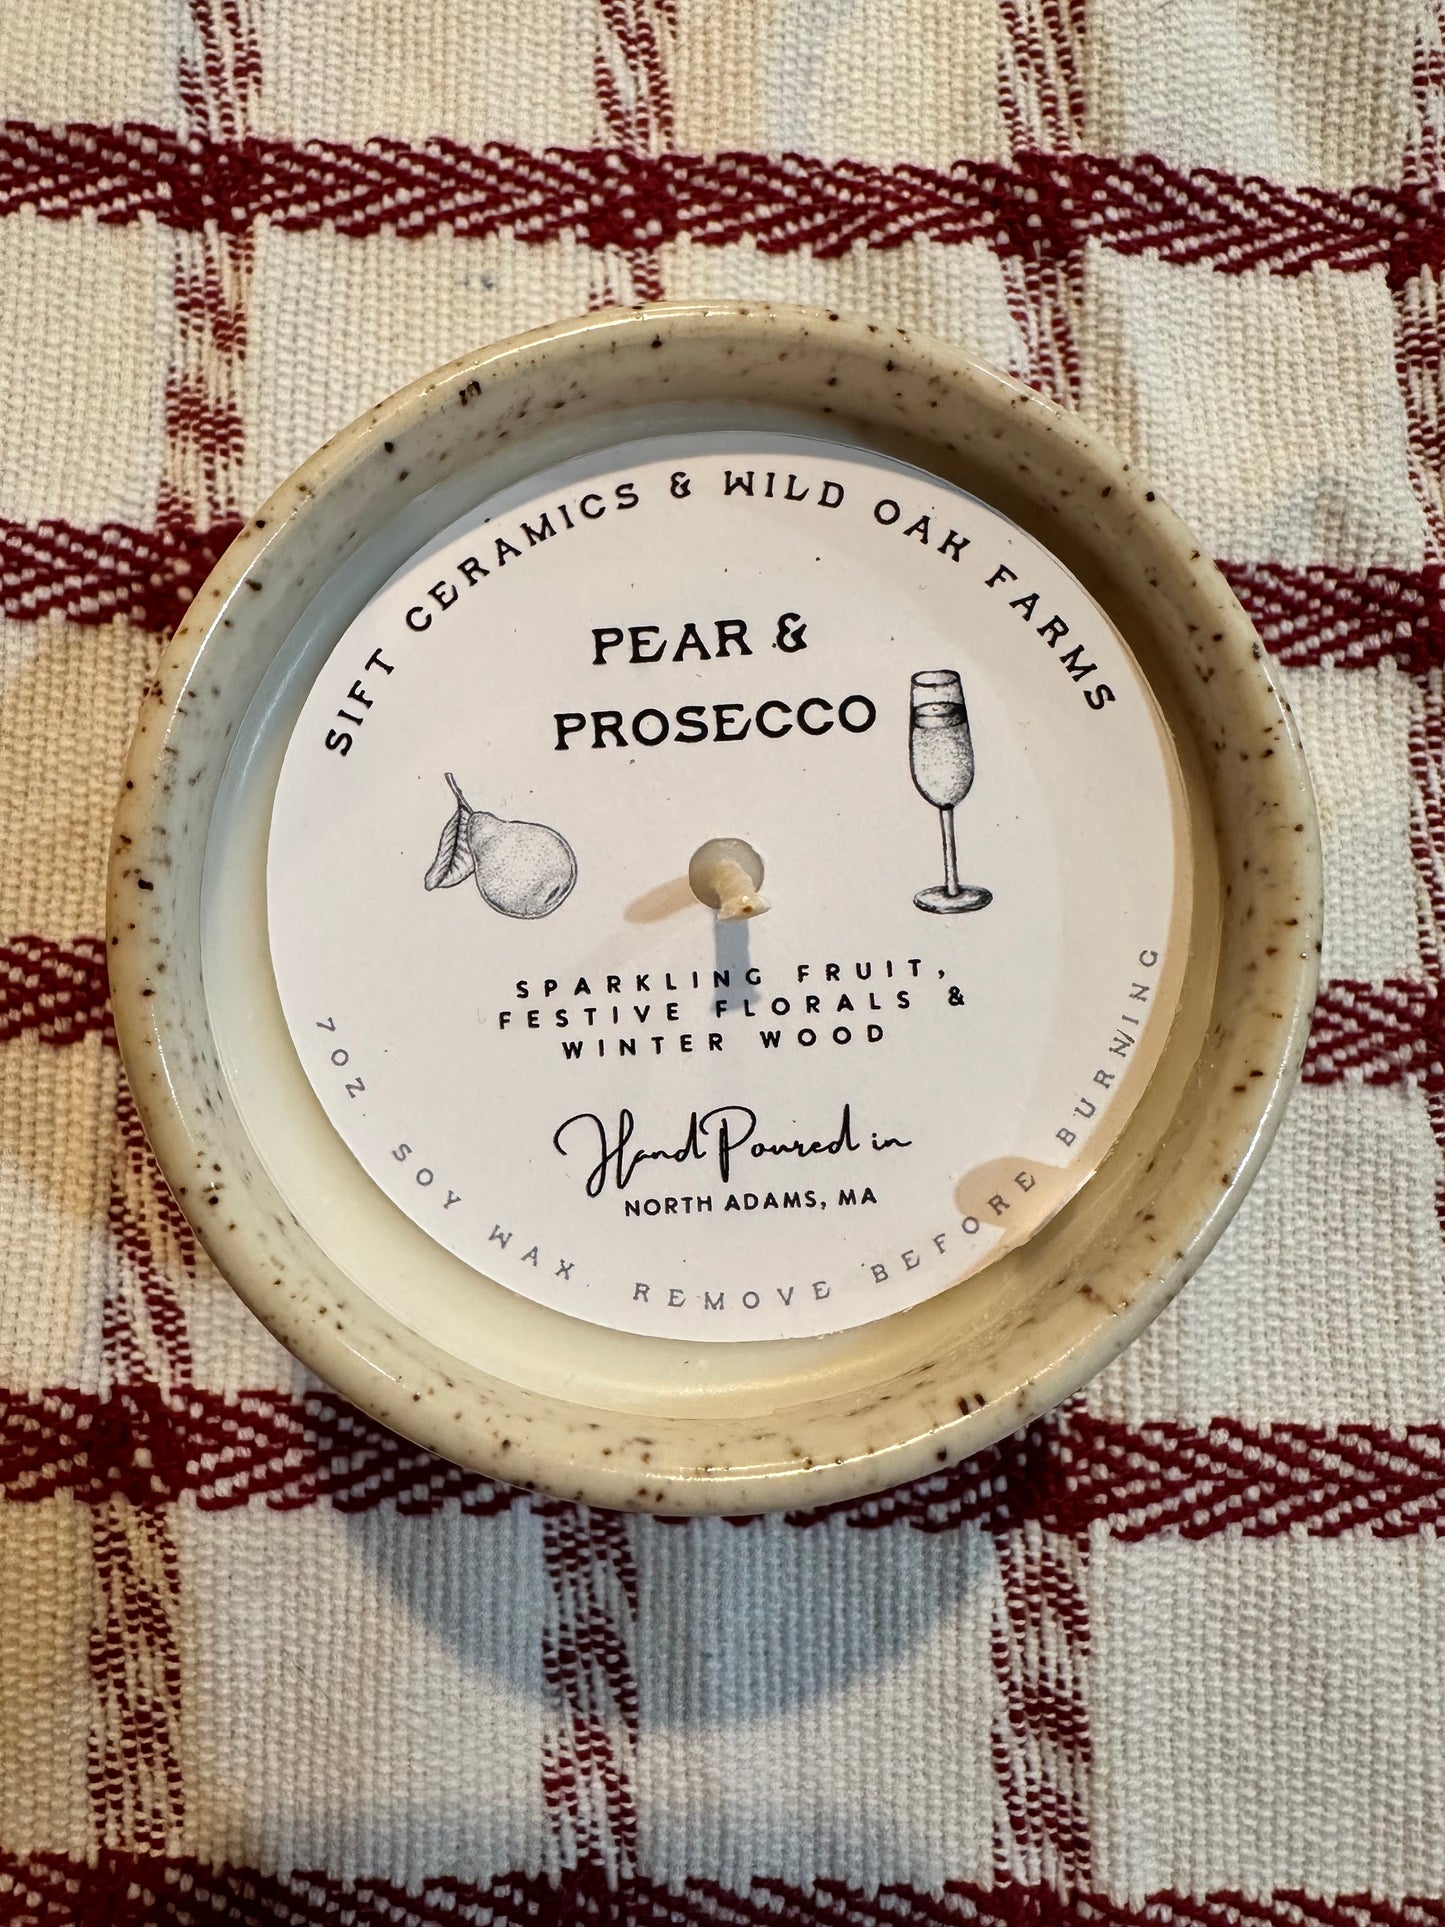 Pear & Prosecco Candle